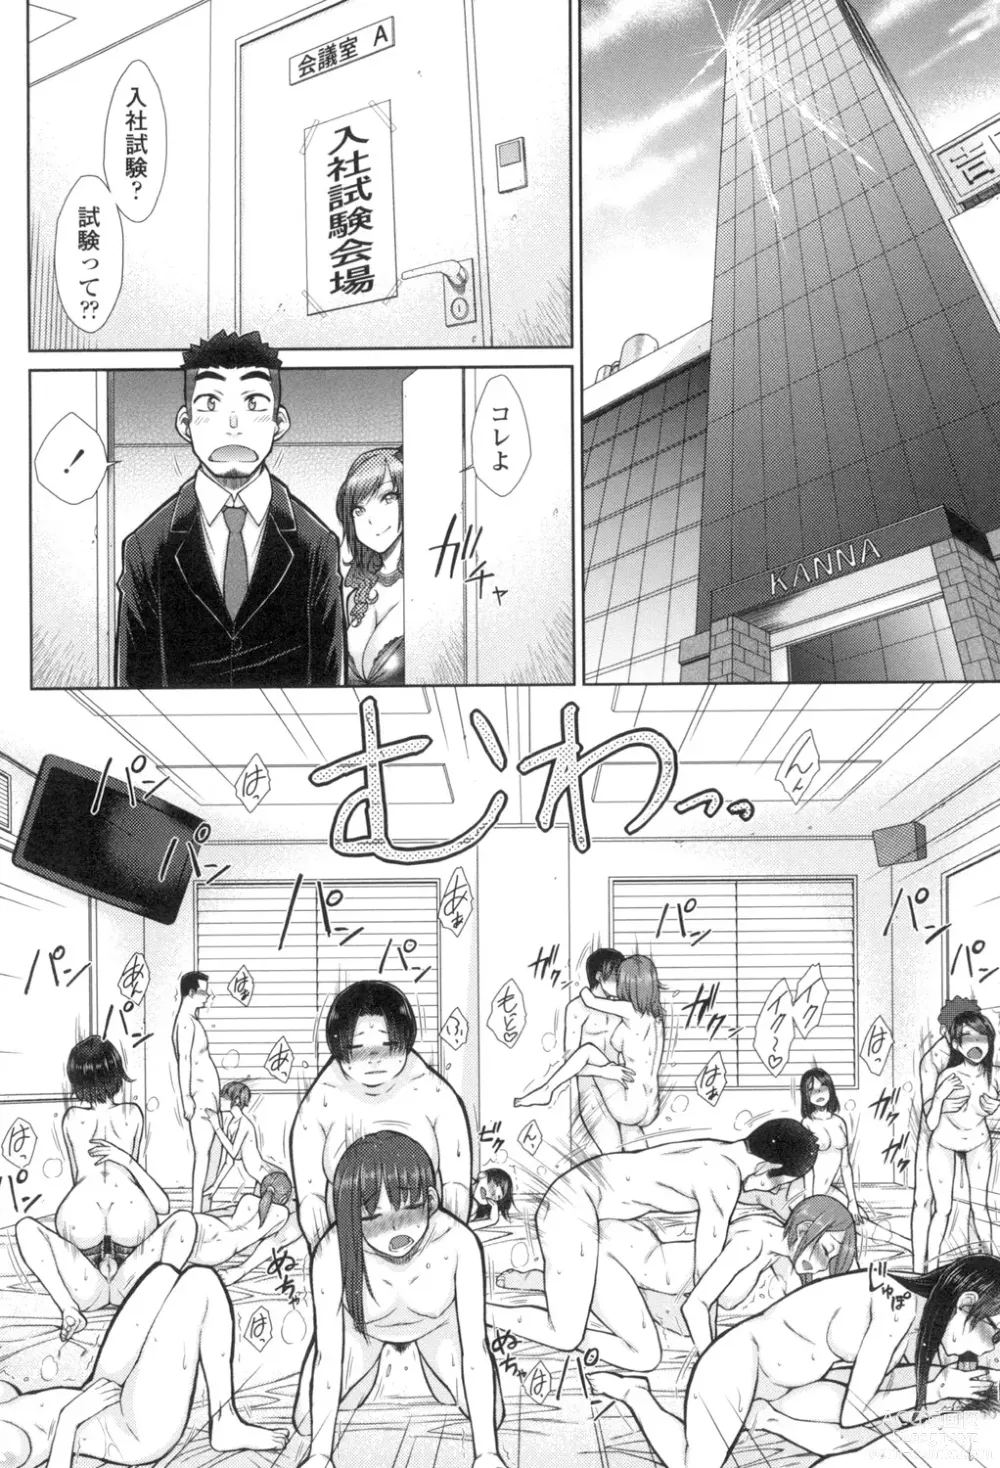 Page 7 of manga Kochira Joshi Shain Senyou Seishorika - Sex Industry Division for Womens Employees Dedicated